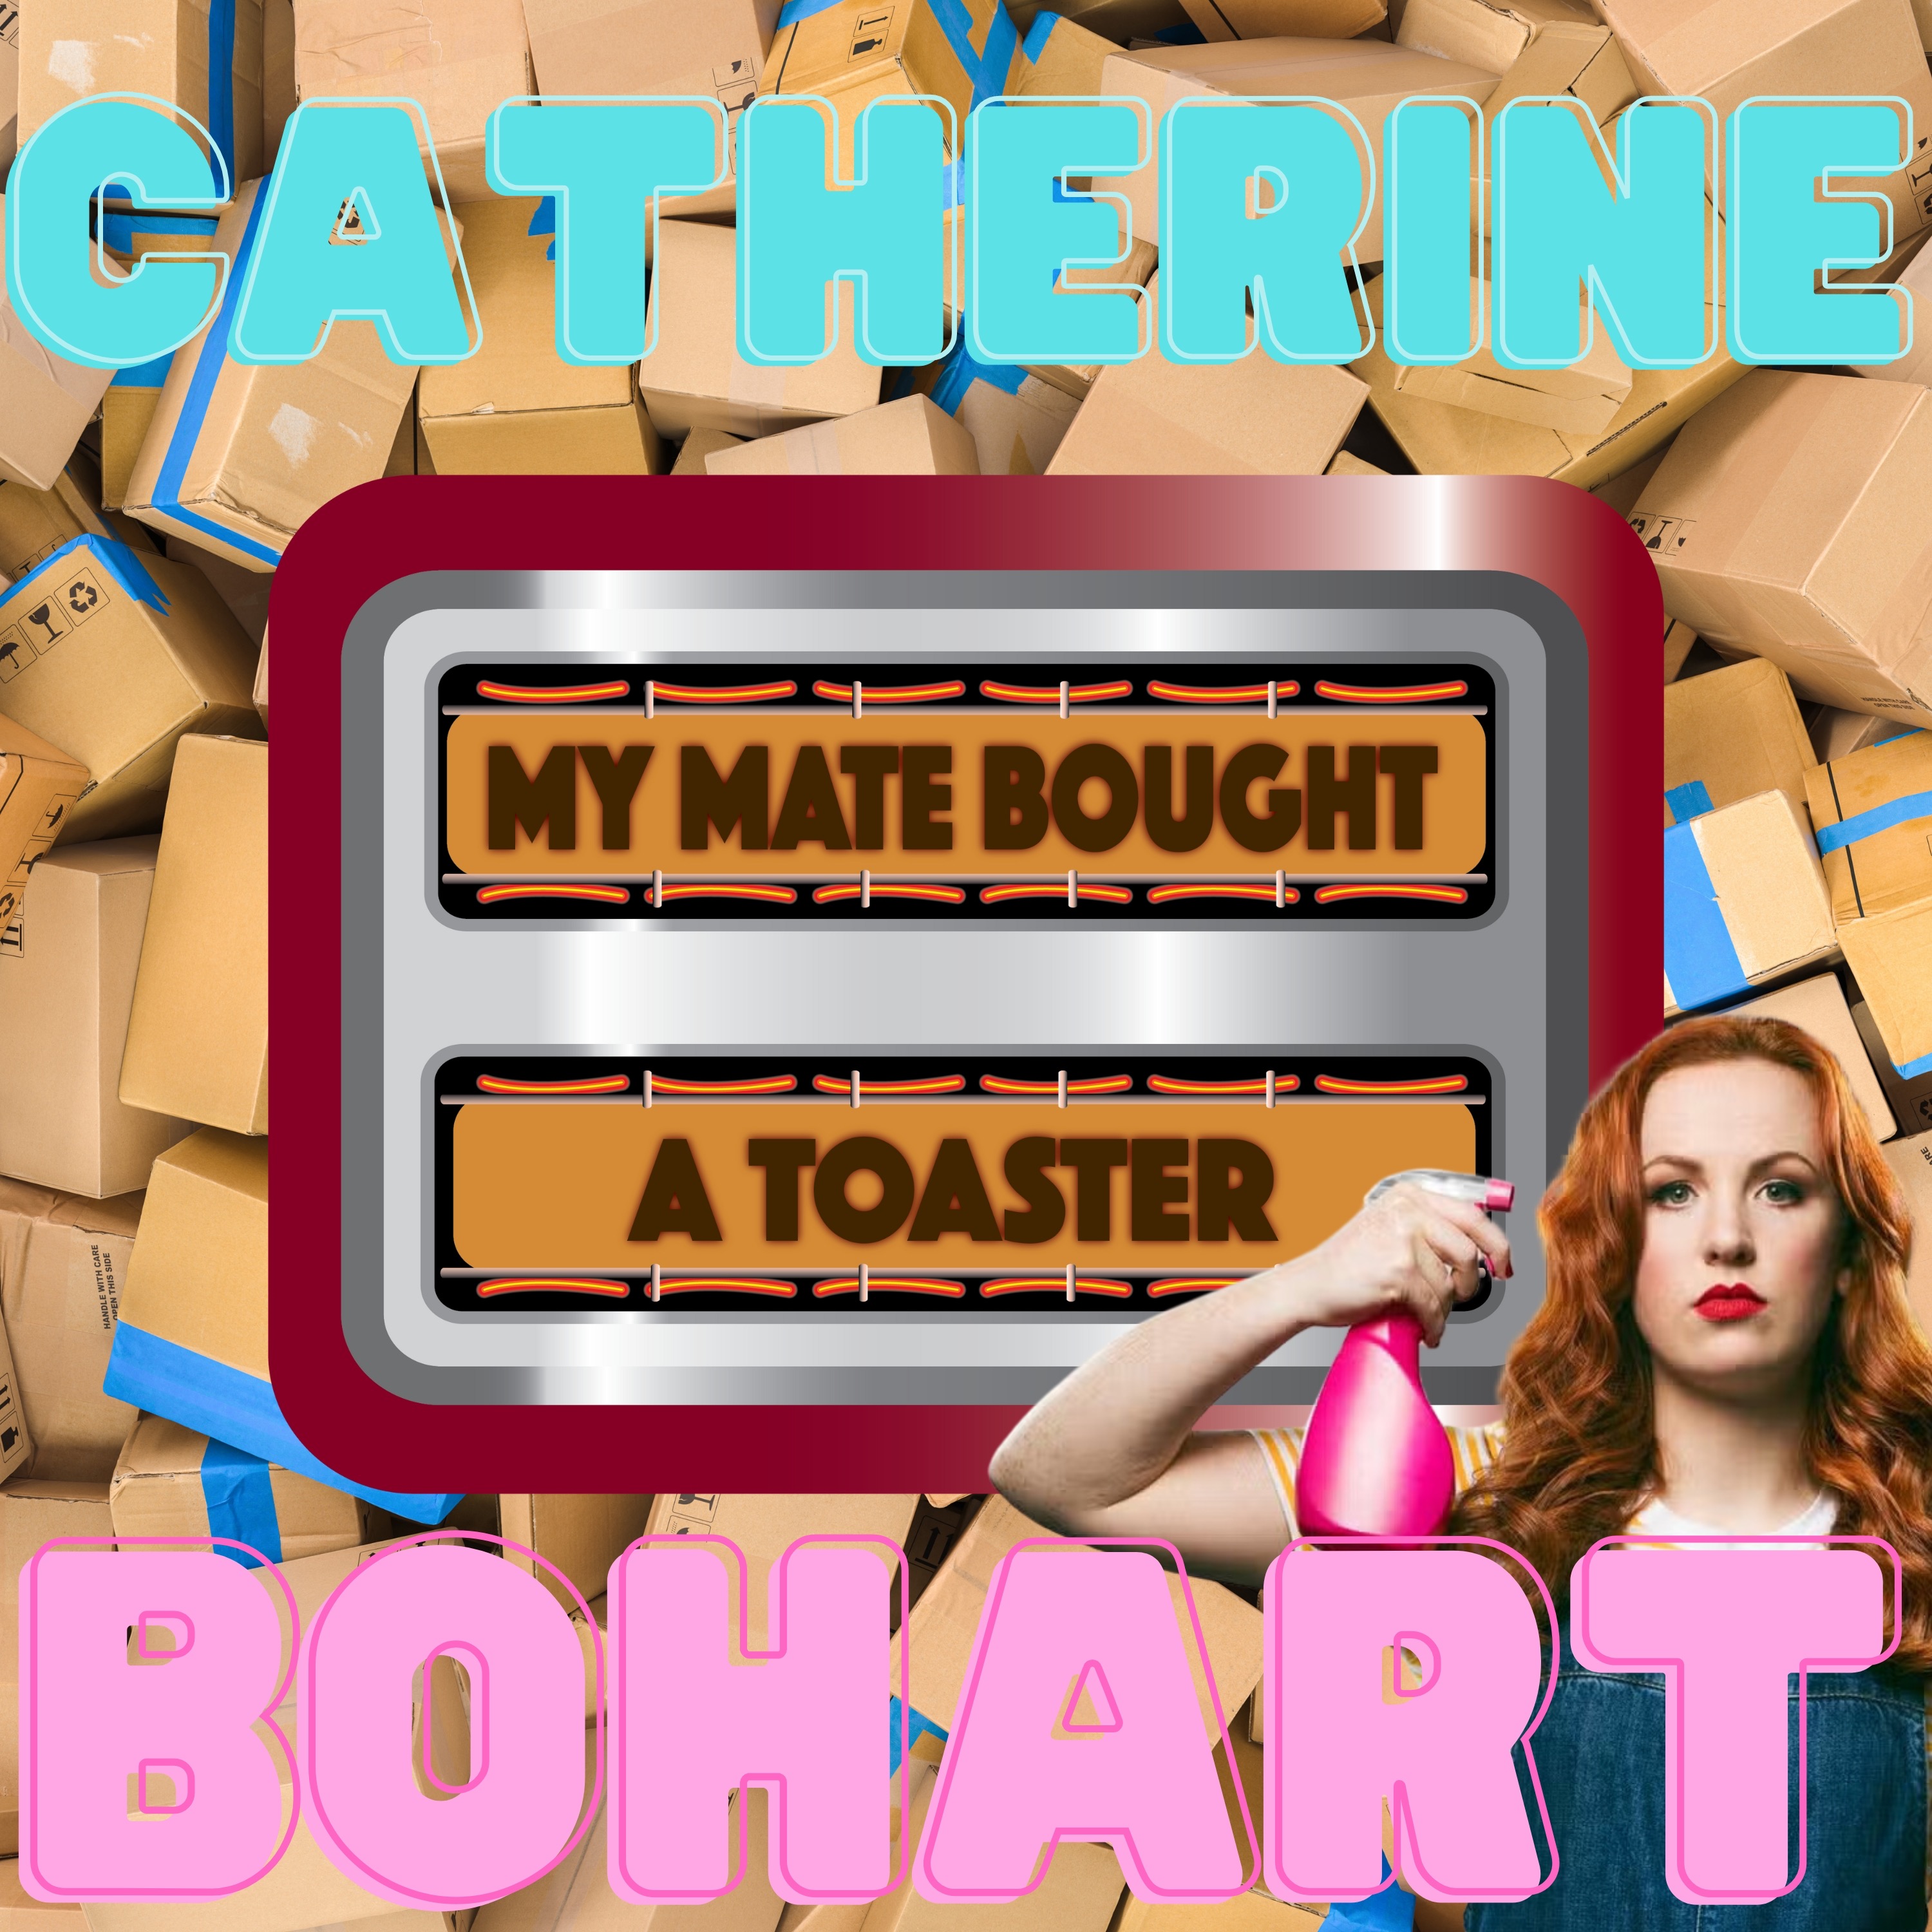 Catherine Bohart